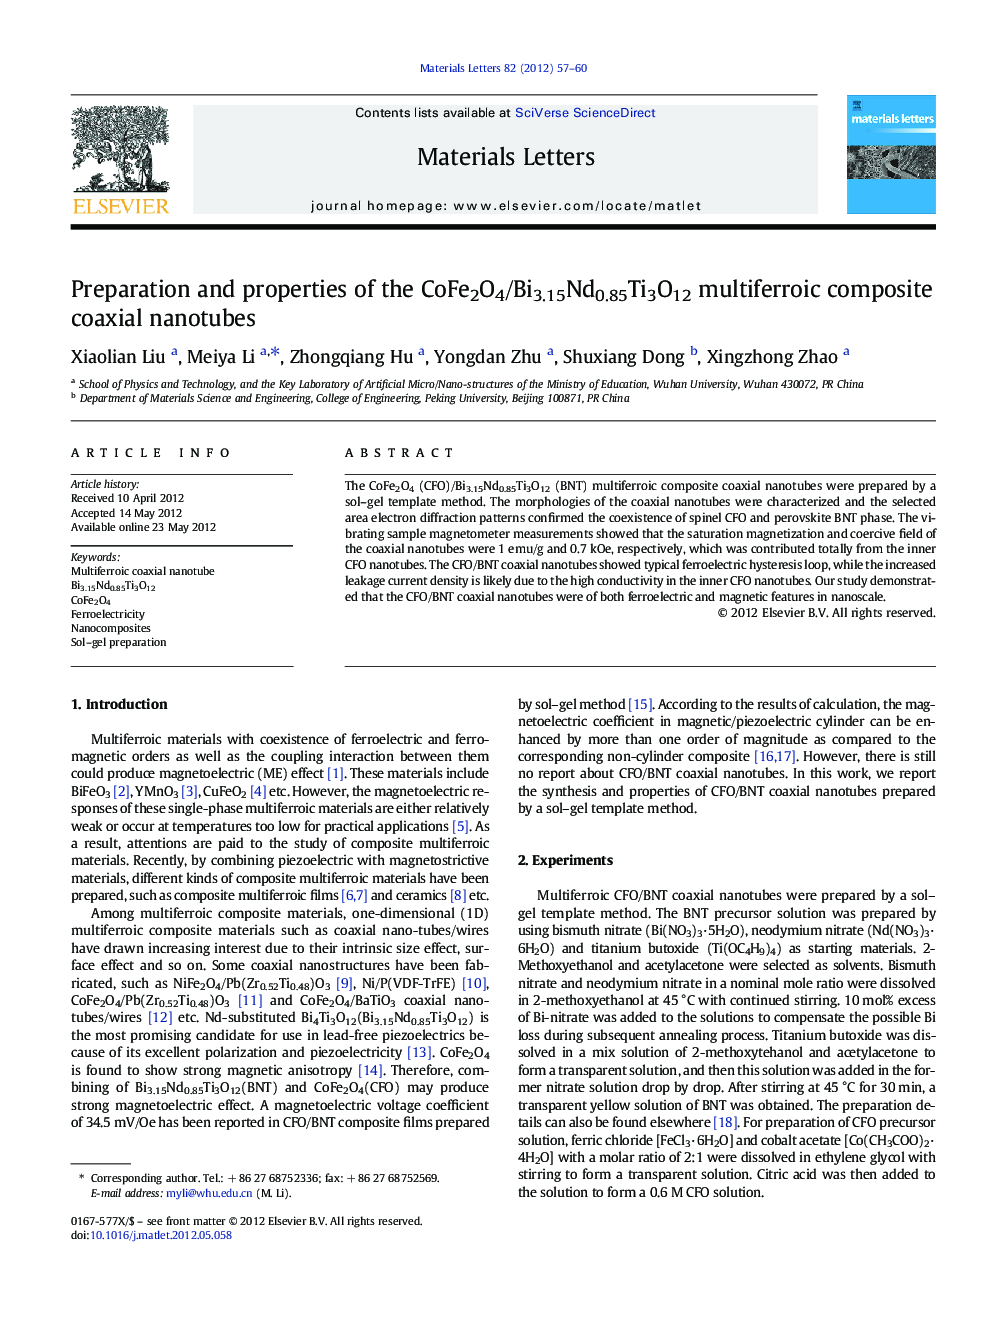 Preparation and properties of the CoFe2O4/Bi3.15Nd0.85Ti3O12 multiferroic composite coaxial nanotubes